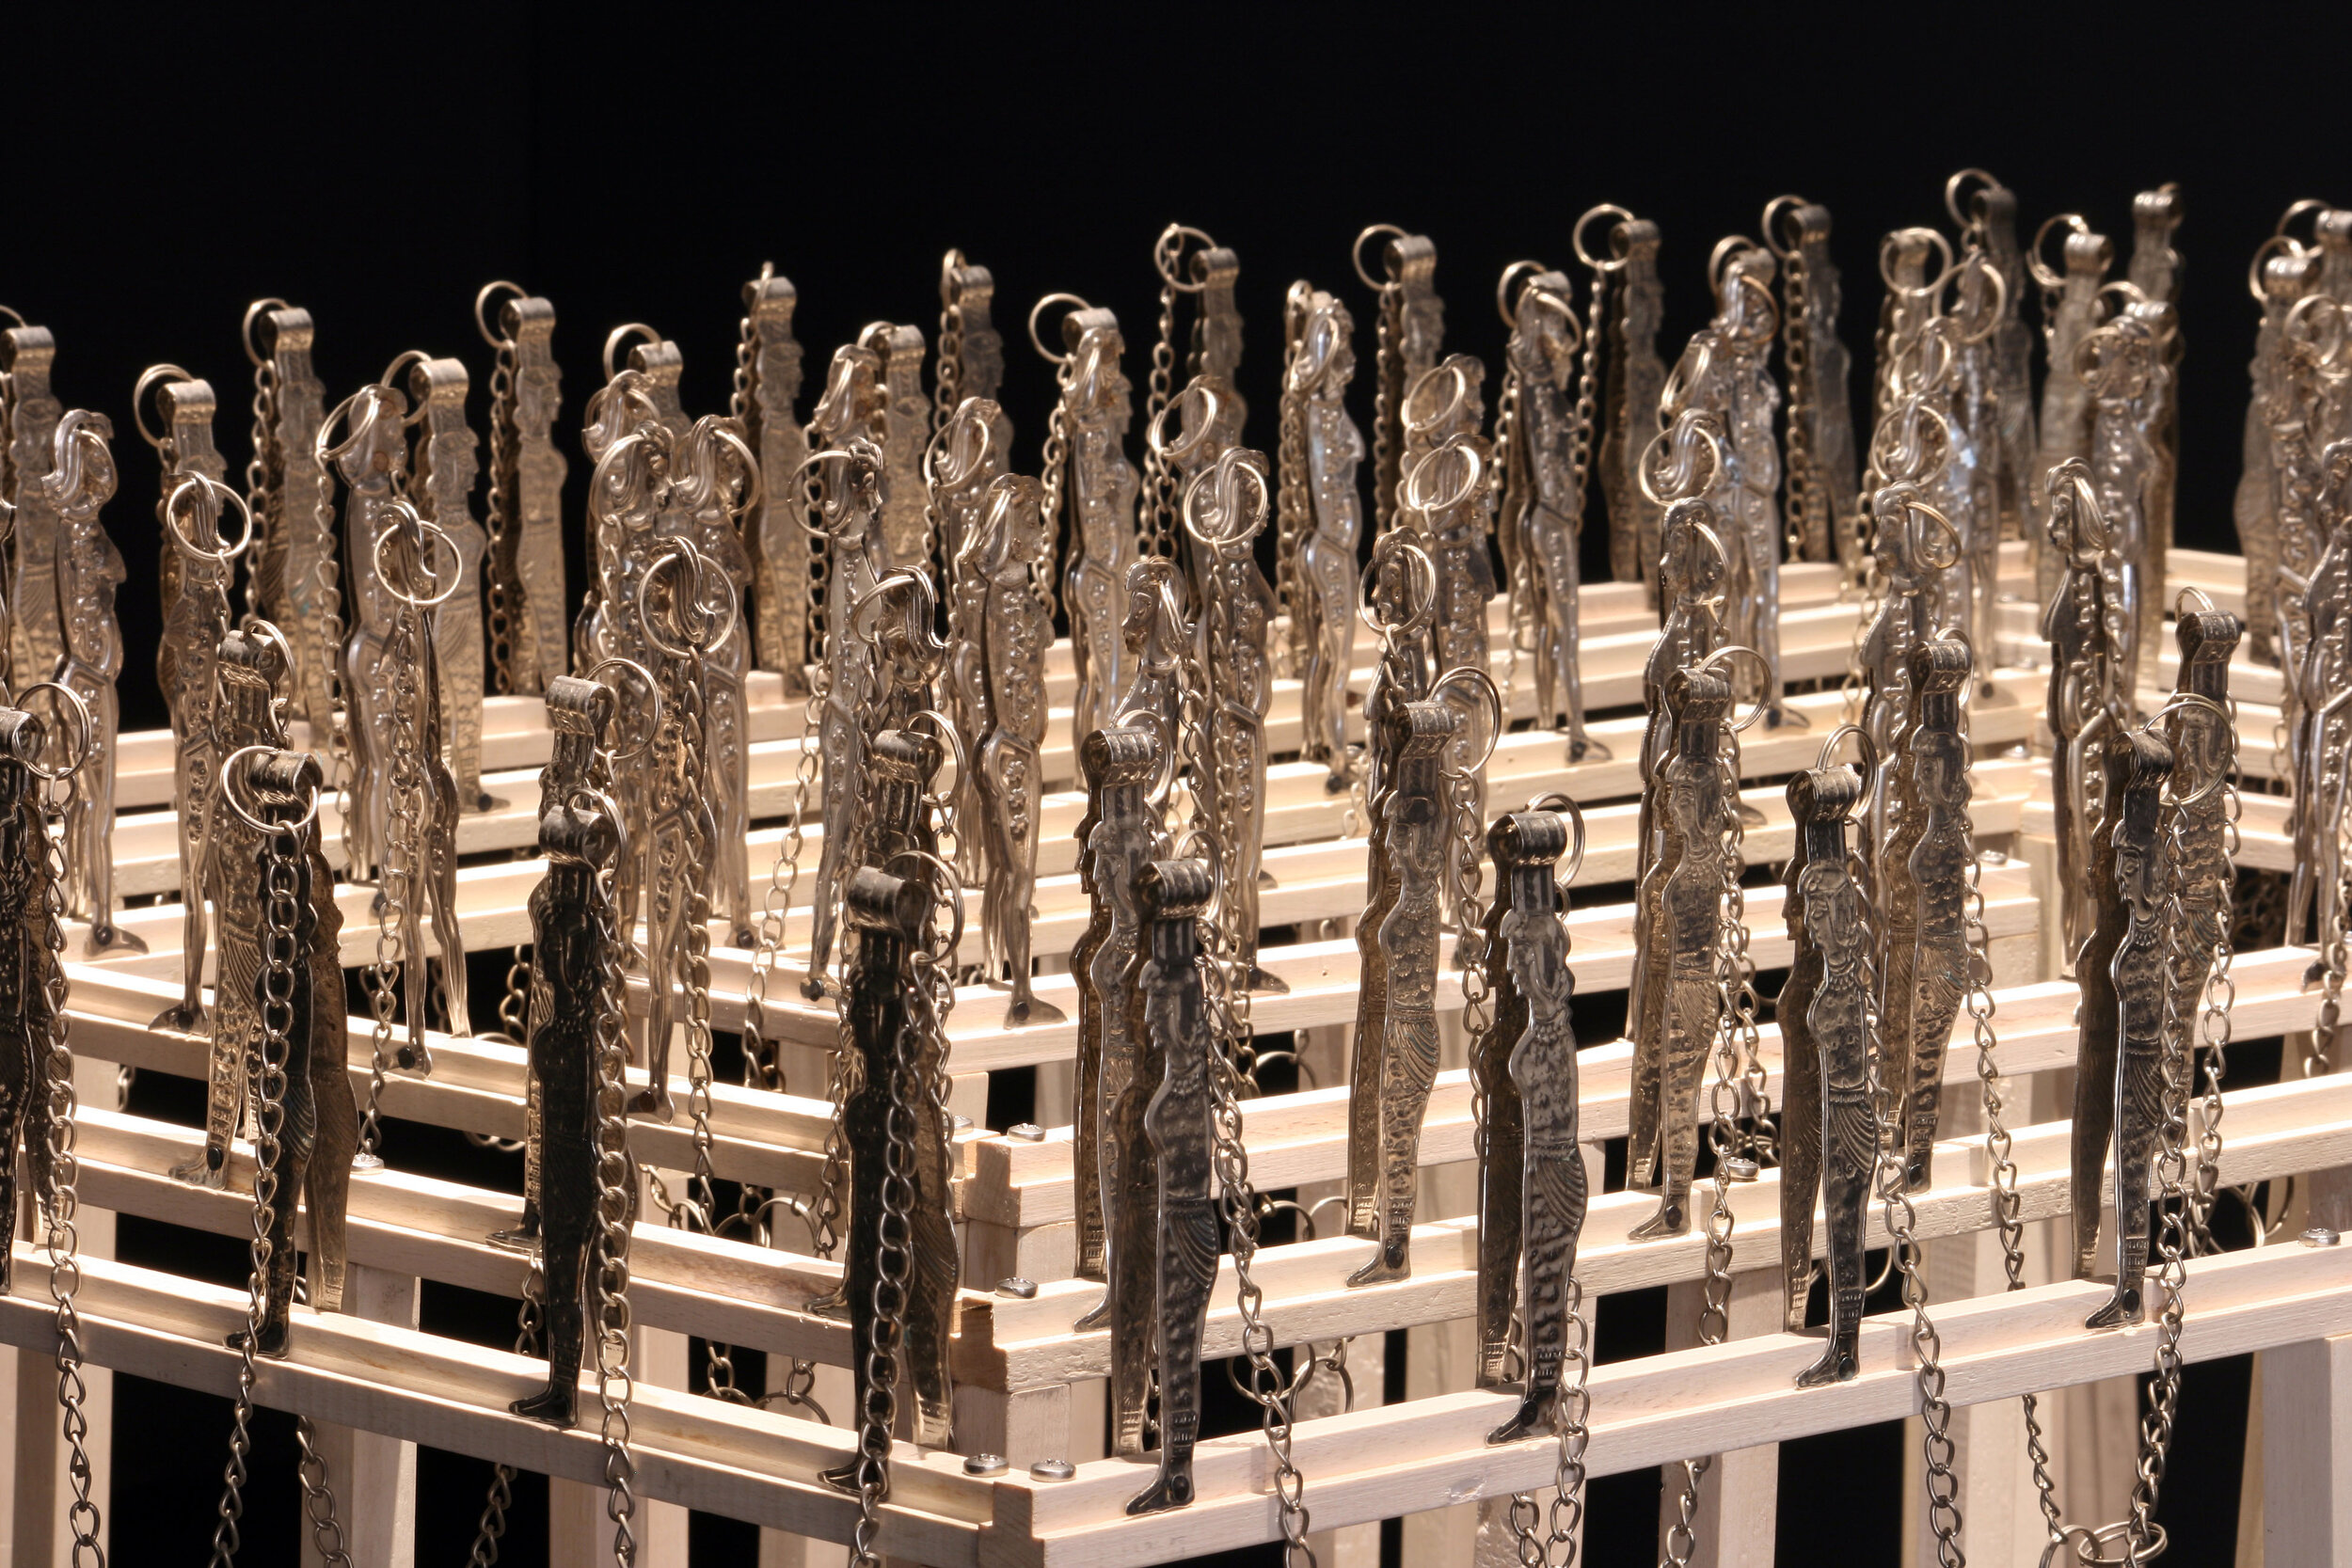  Masha Labyrinth (detail), 2006, installation of stainless steel masha dolls and wood, 180 x 210 cm x 2 